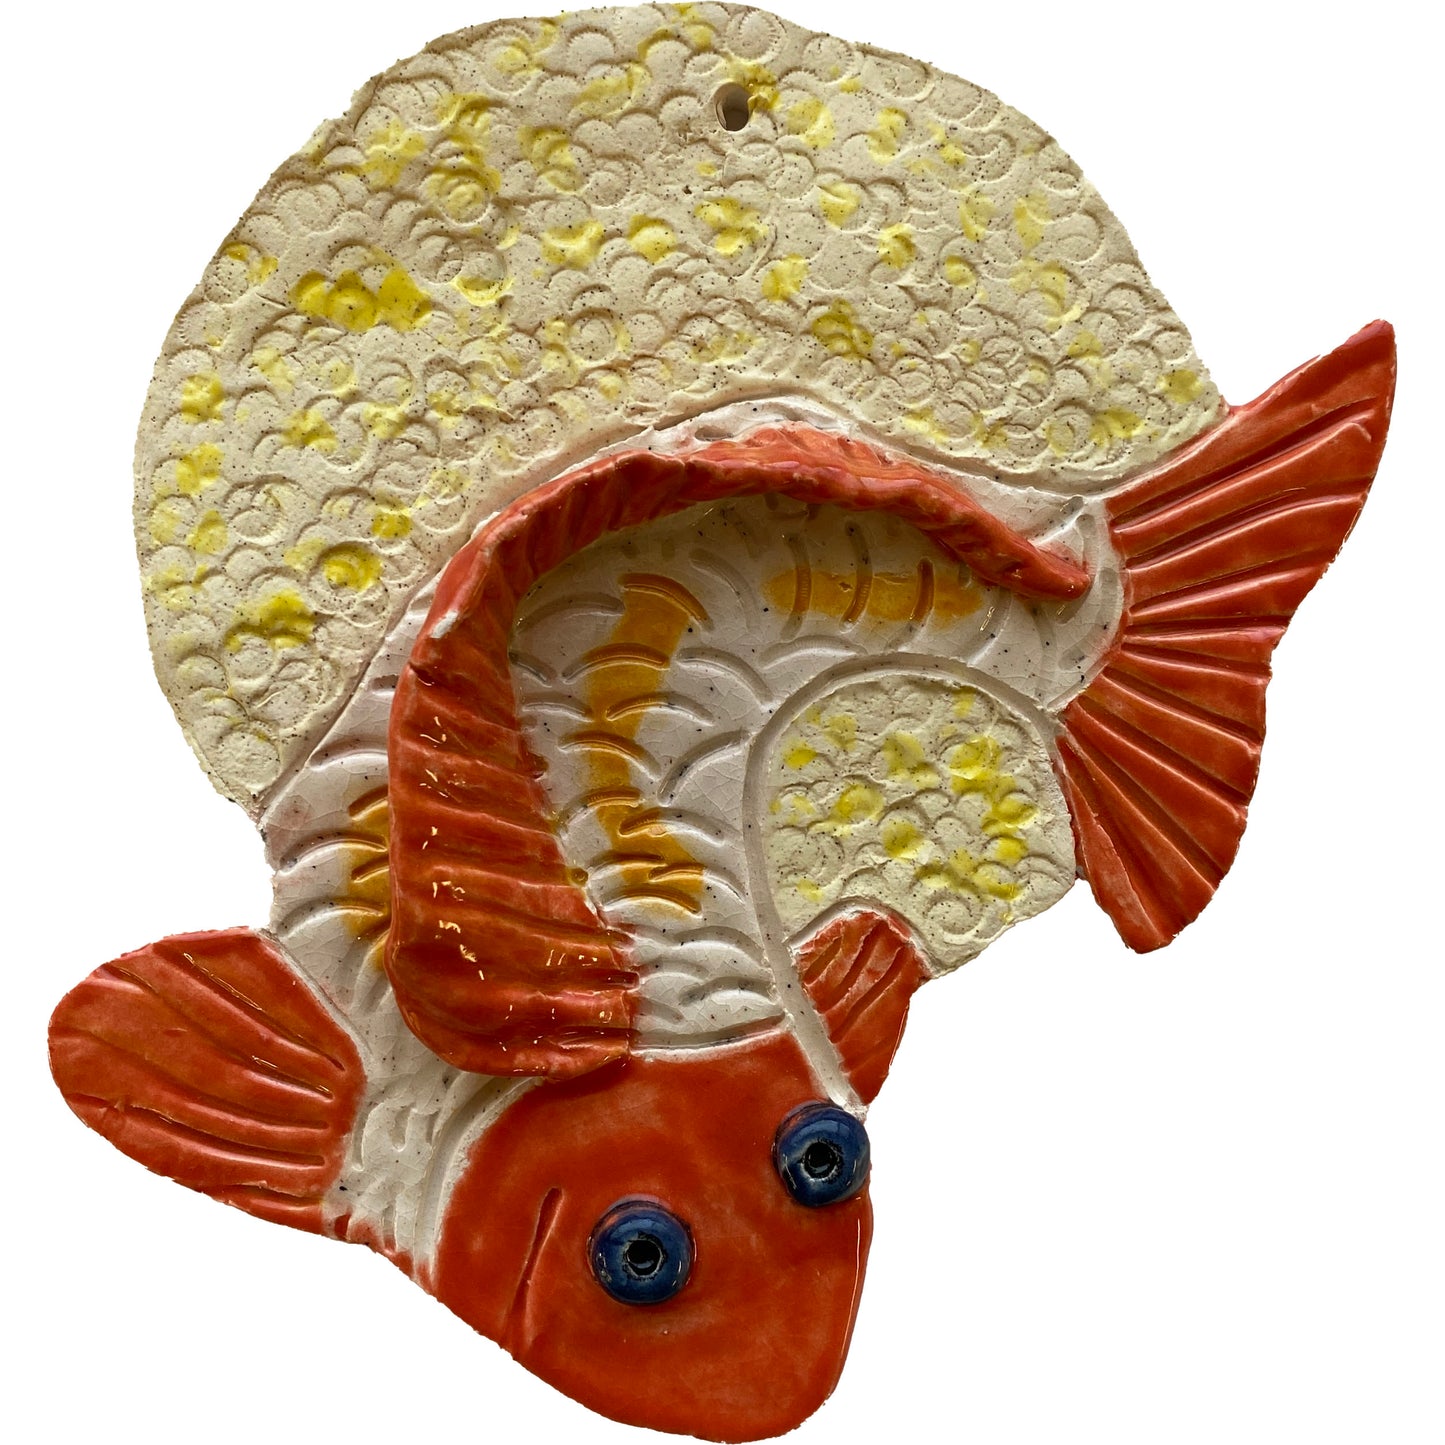 Ceramic Arts Handmade Clay Crafts 6.5-inch x 6-inch Fresh Fish Glazed by Annika Kohler-Crowe